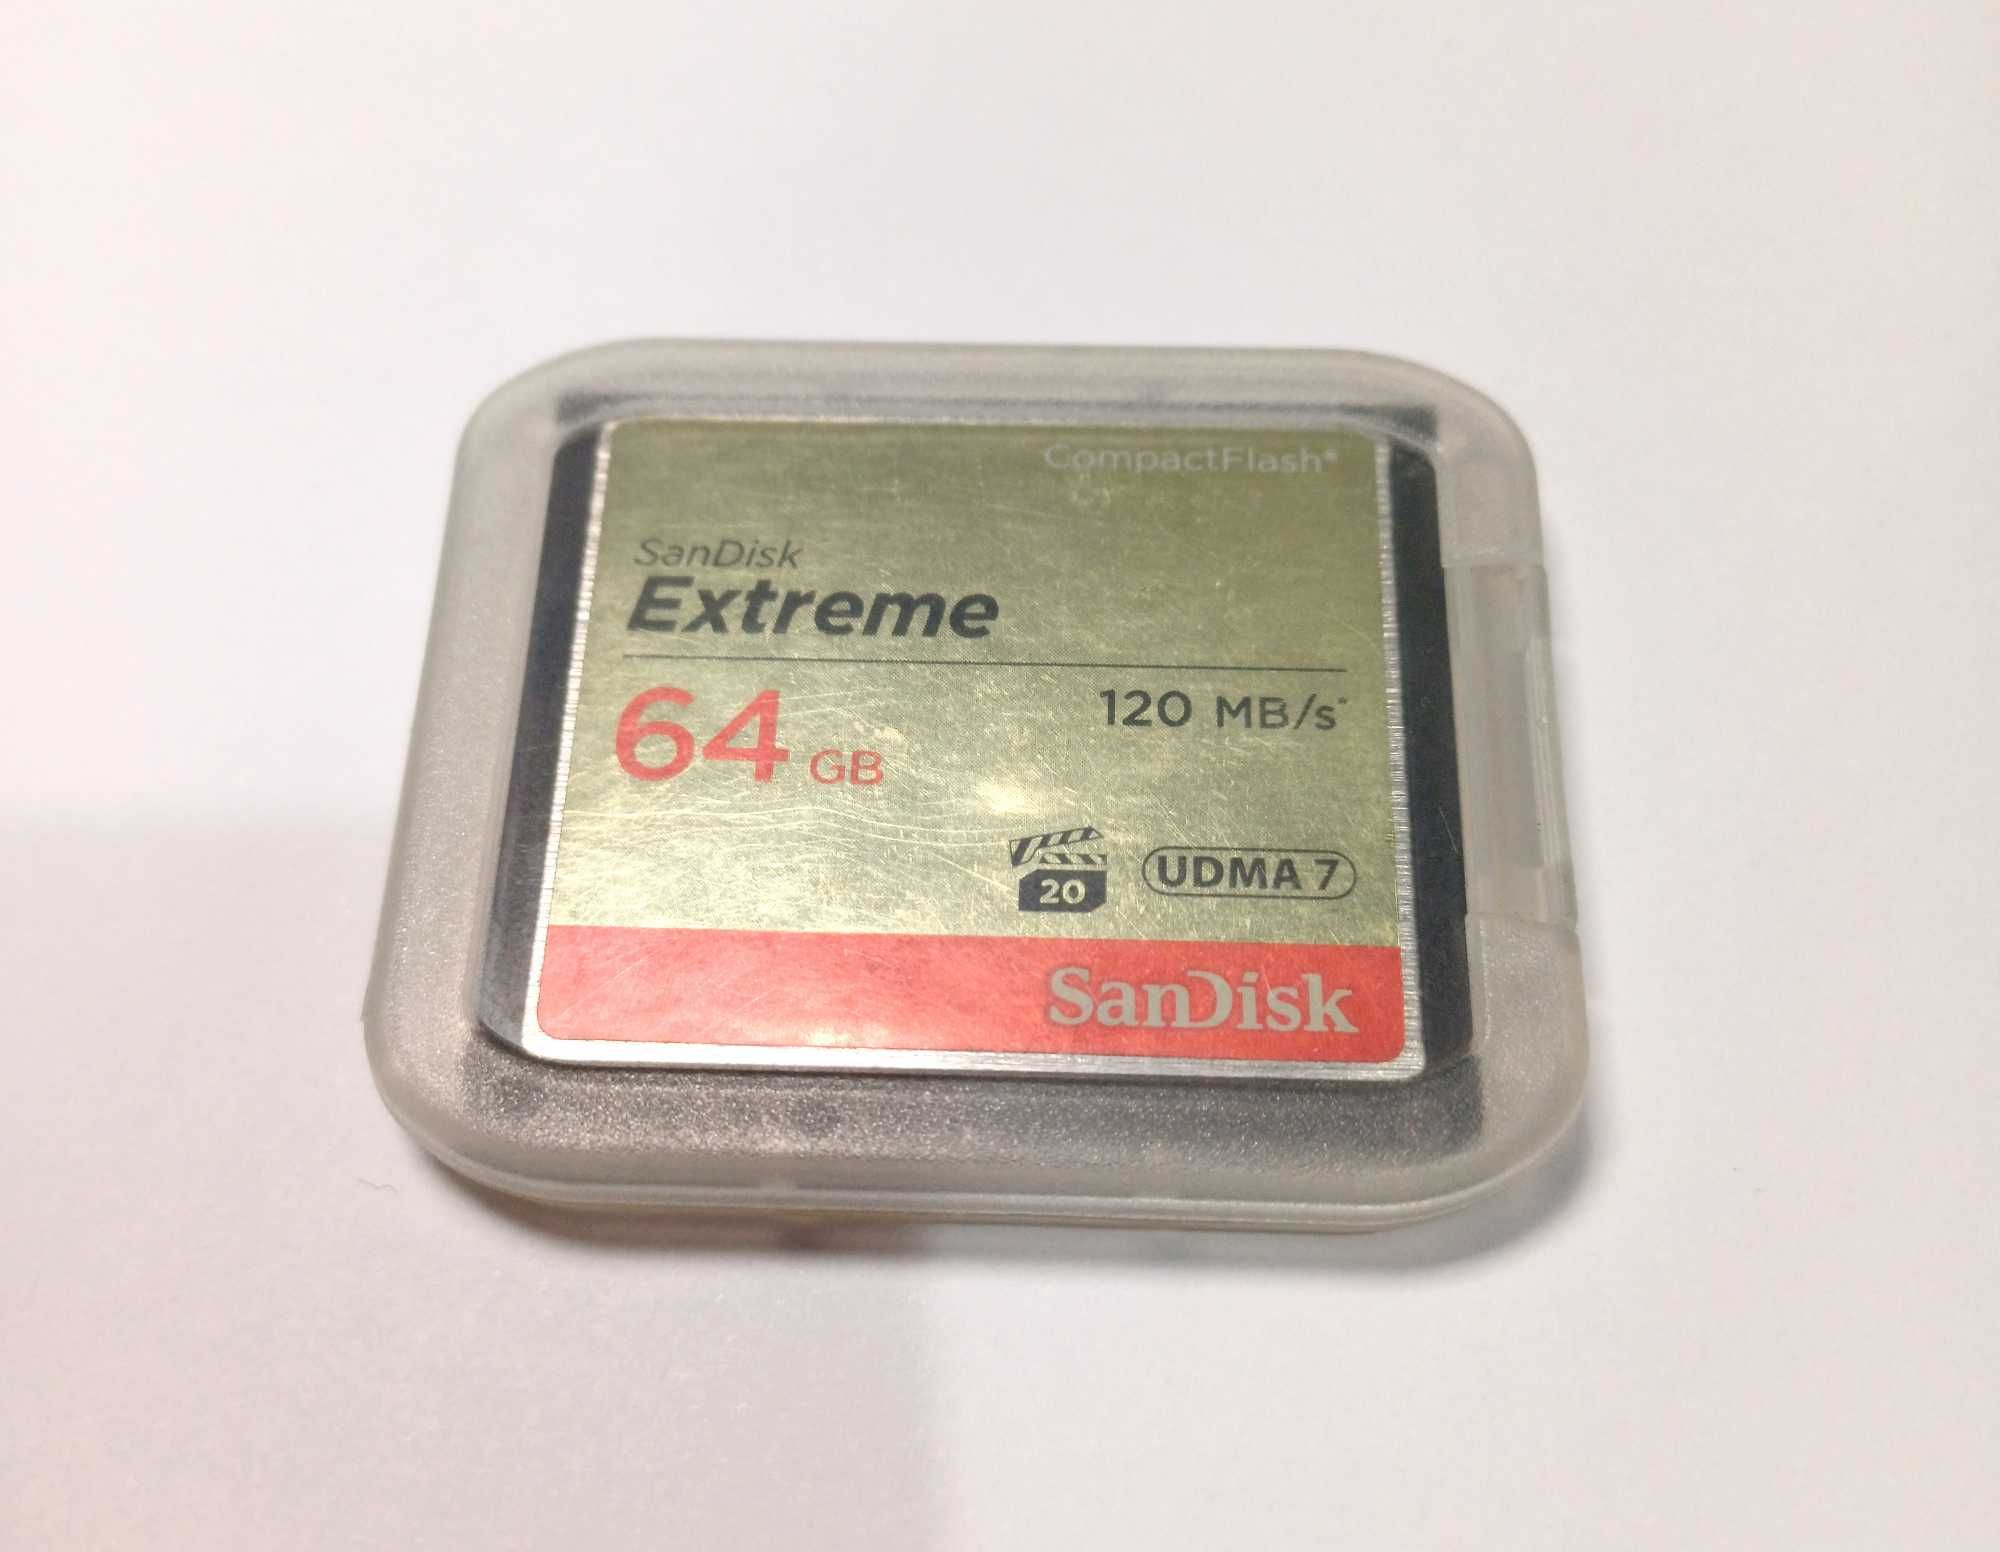 SanDisk 64 GB Extreme CompactFlash, идеальное состояние.